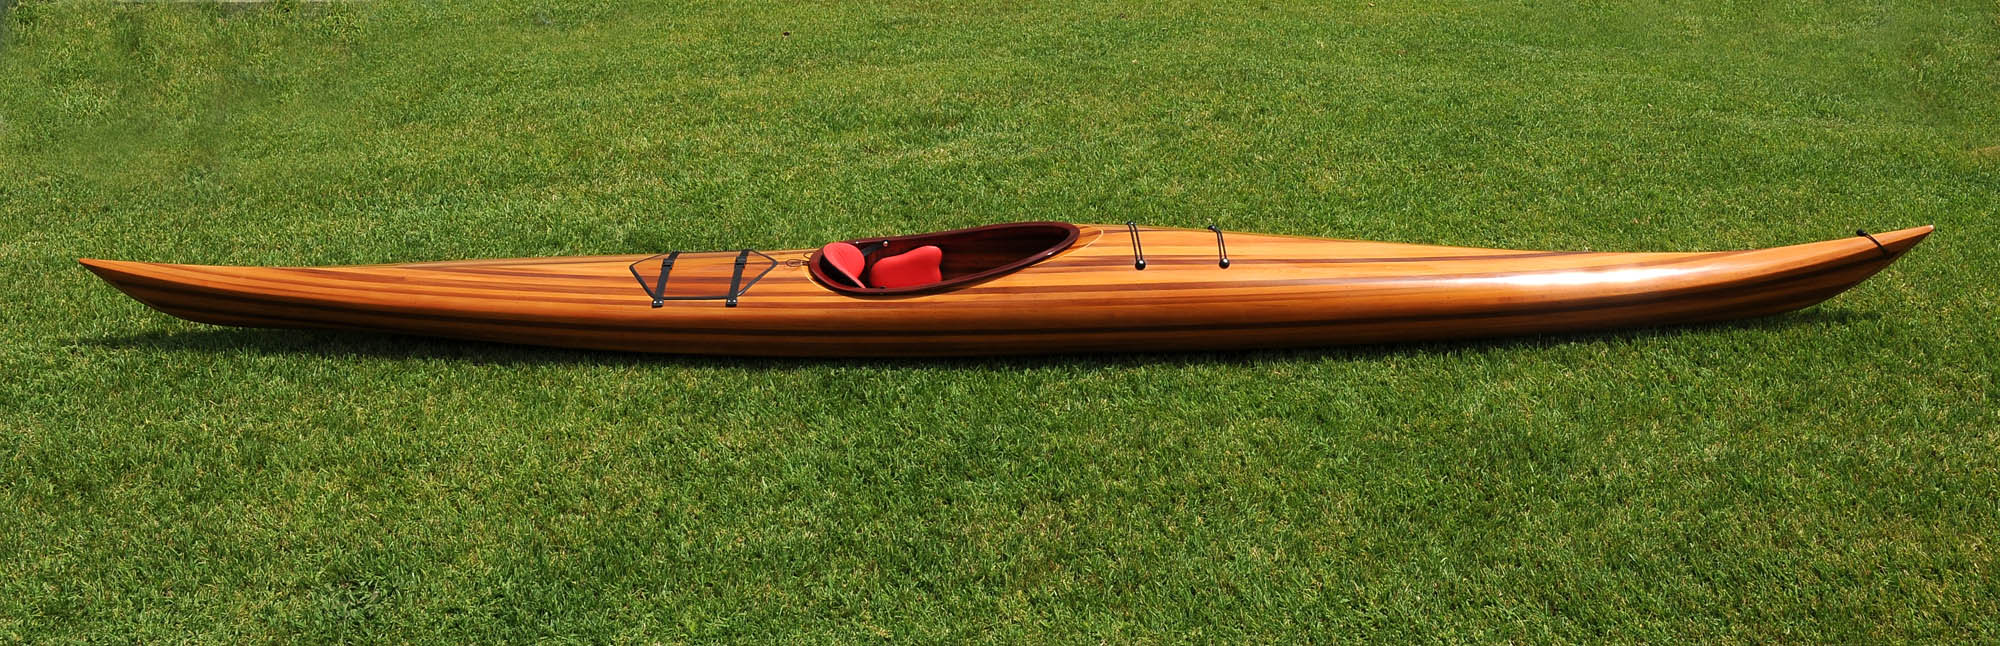 Buy Hudson wooden kayak 18 ft - Wooden Boat USA